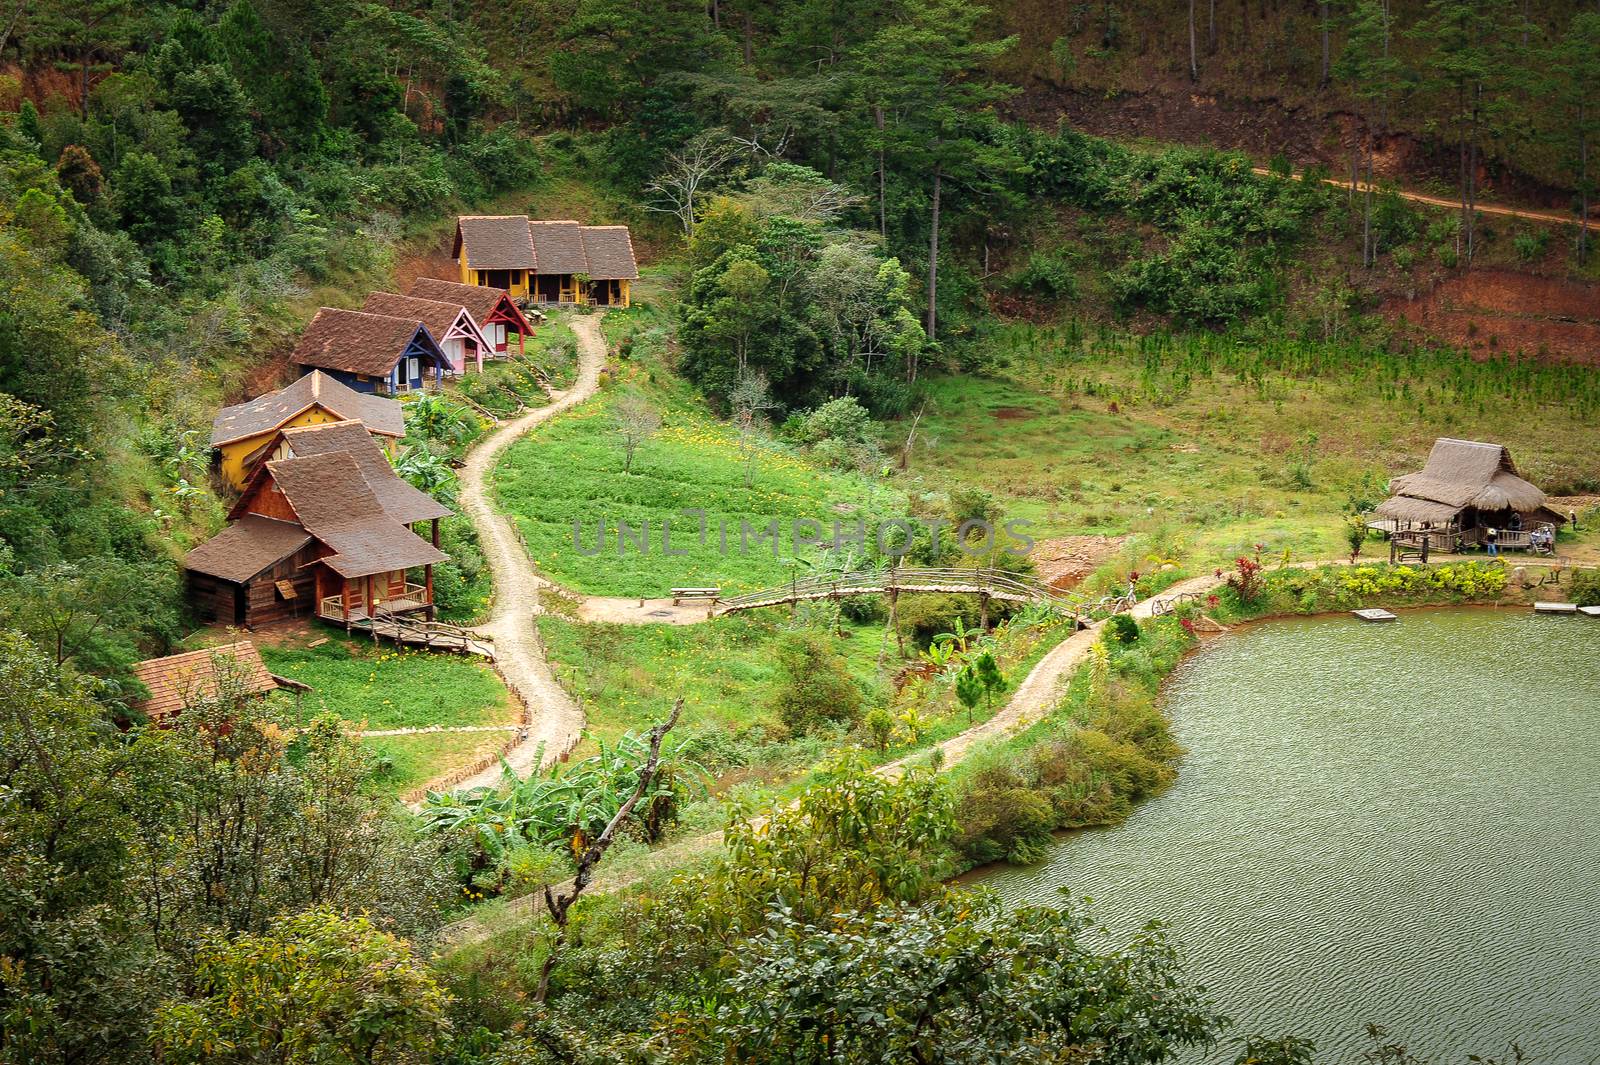 DALAT CITY - DECEMBER 30: CuLan tribal village at the north of Dalat city December 30 2012 in Lamdong province, Vietnam.